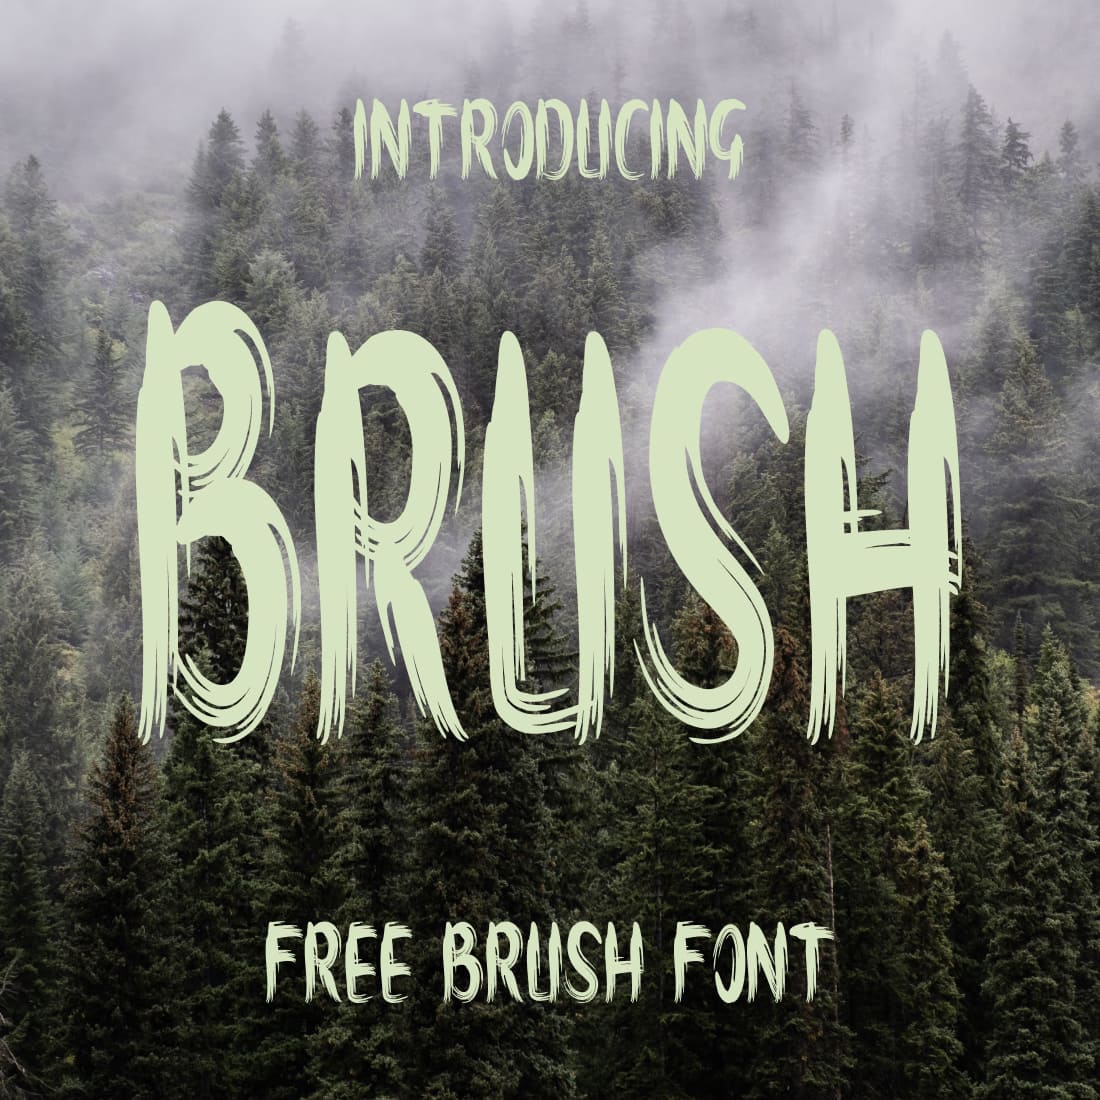 Amazing brush font free Cover collage image by MasterBundles.